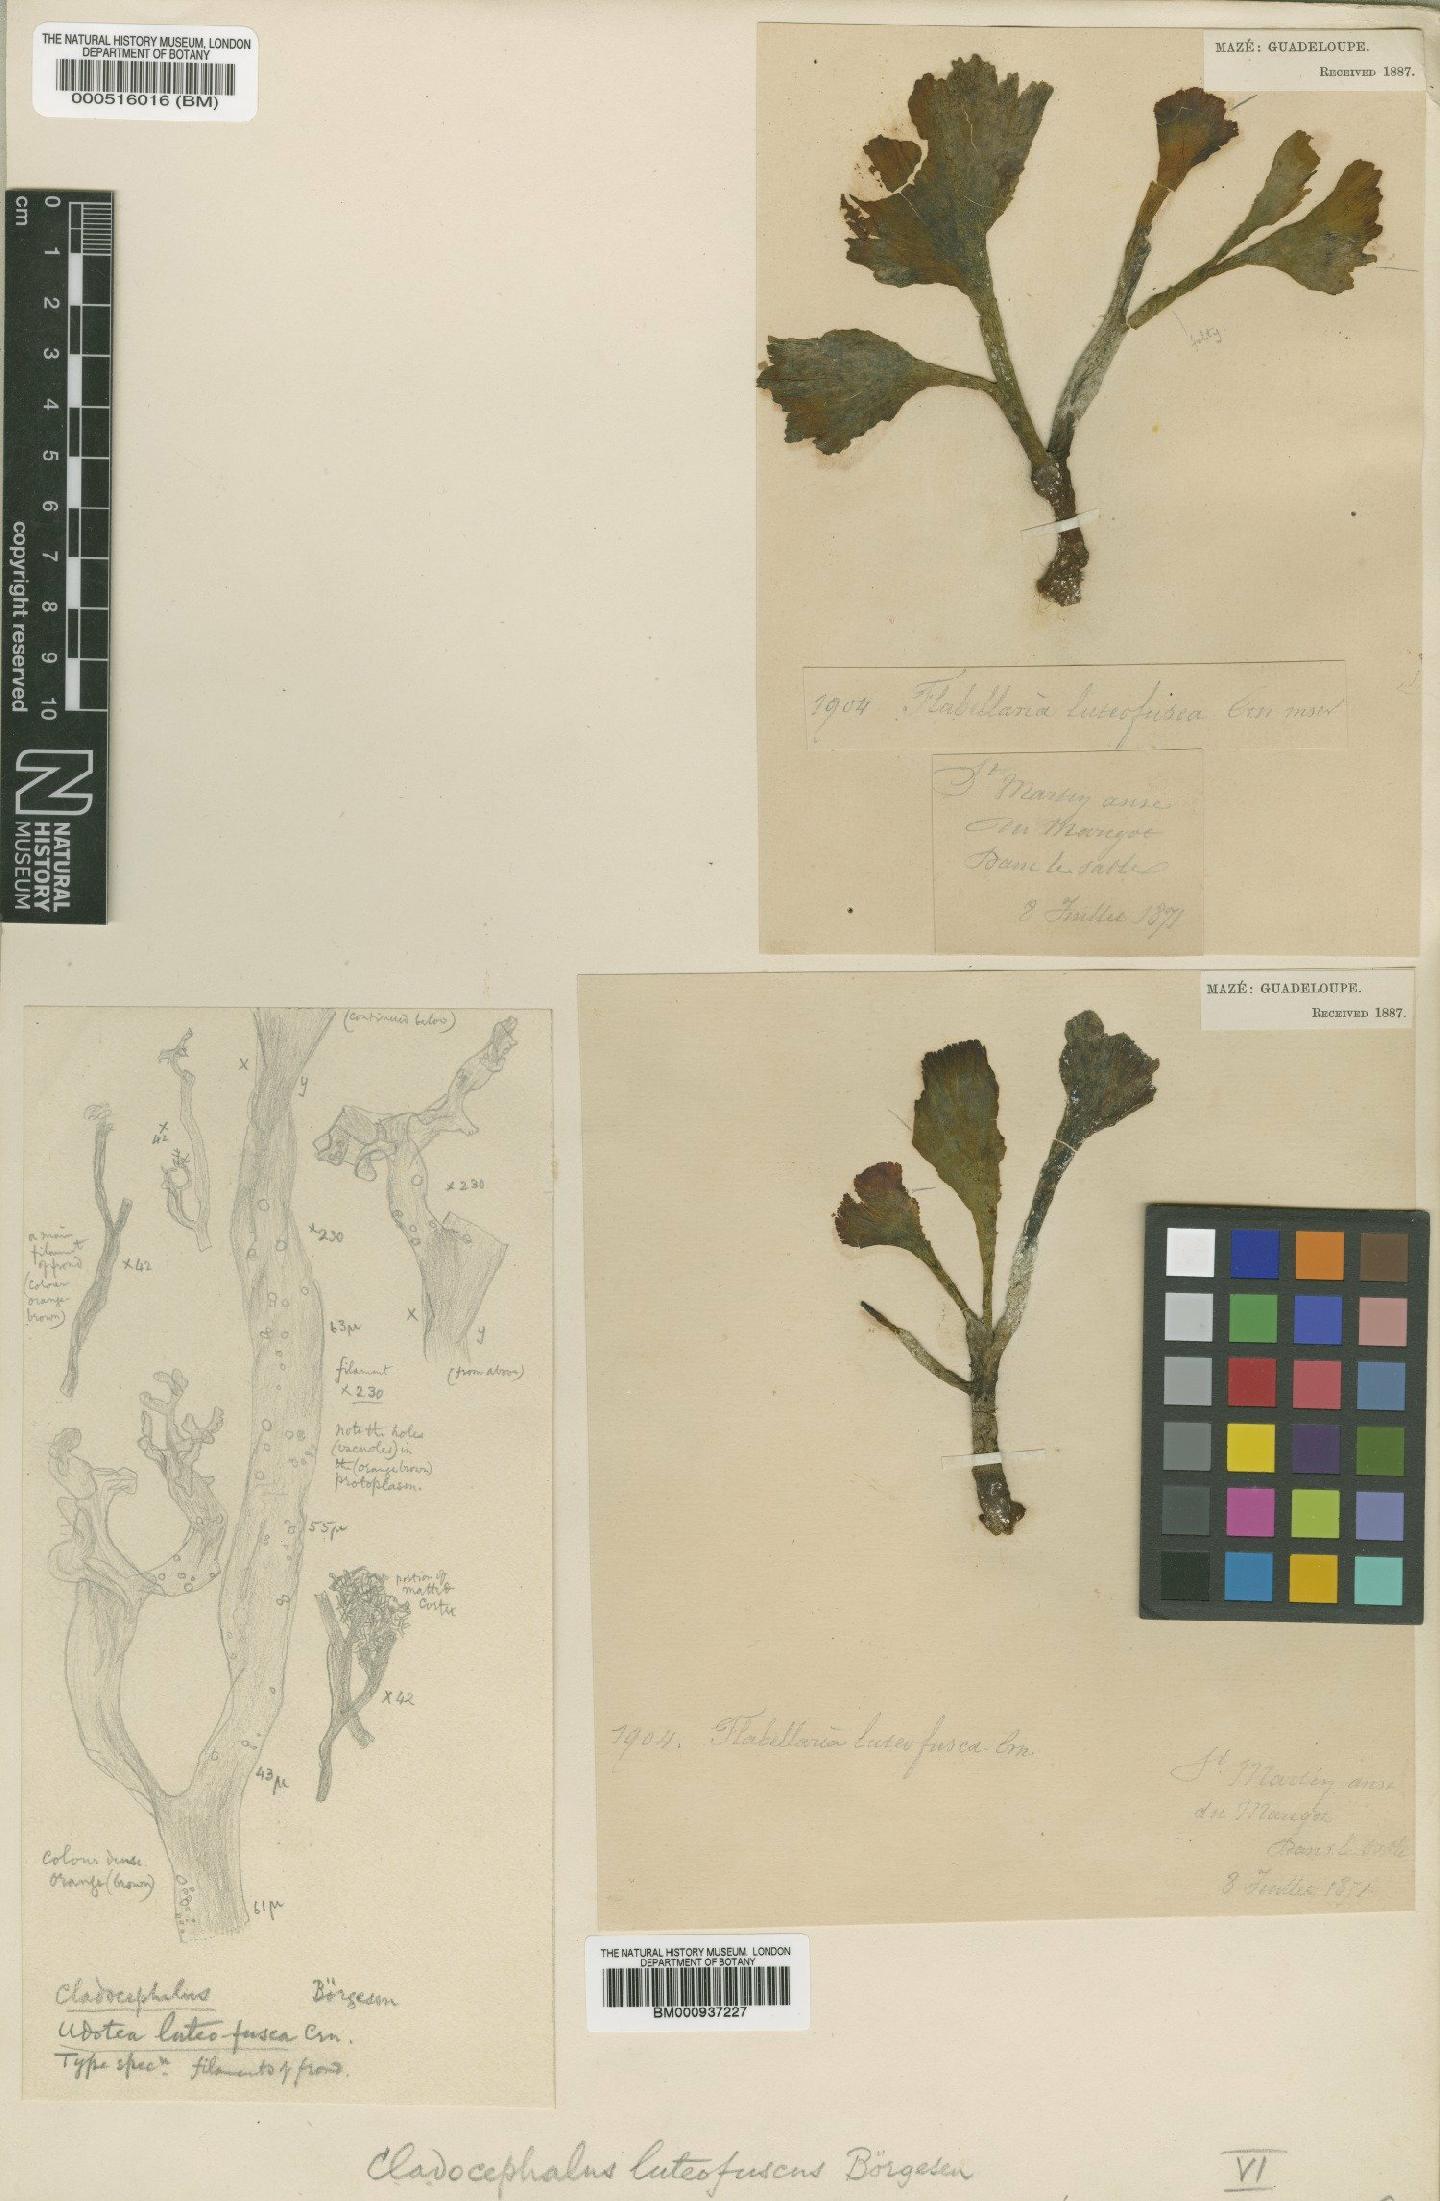 To NHMUK collection (Cladocephalus luteofuscus (H.Crouan & P.Crouan) Børgesen; Type; NHMUK:ecatalogue:473571)